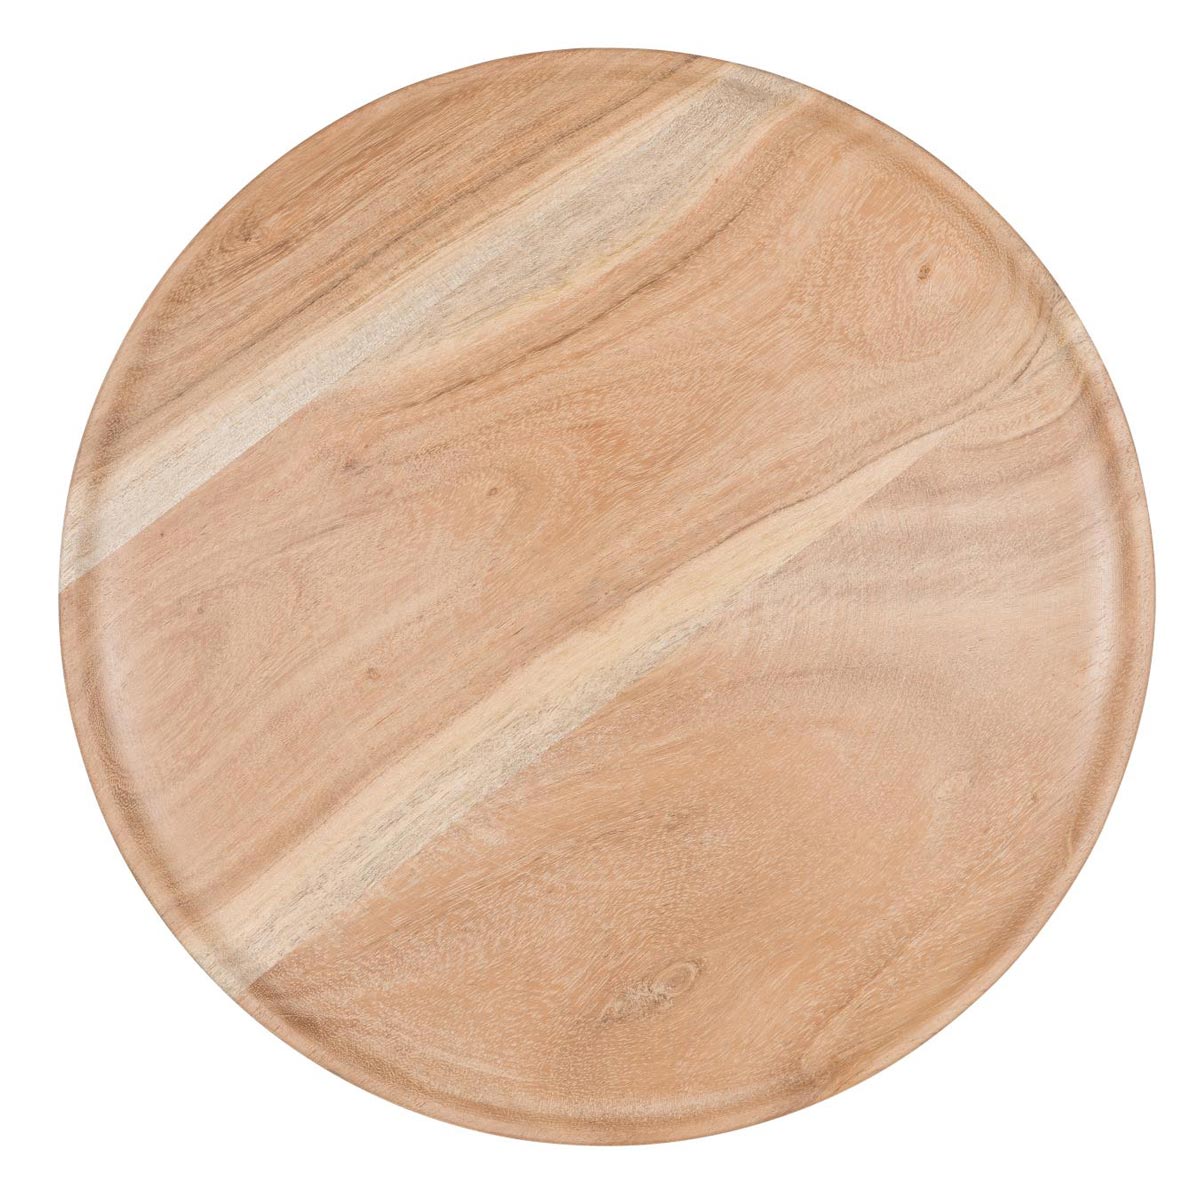 IB Laursen Tray / Plate Acacia Wooden Large 29cm Diameter